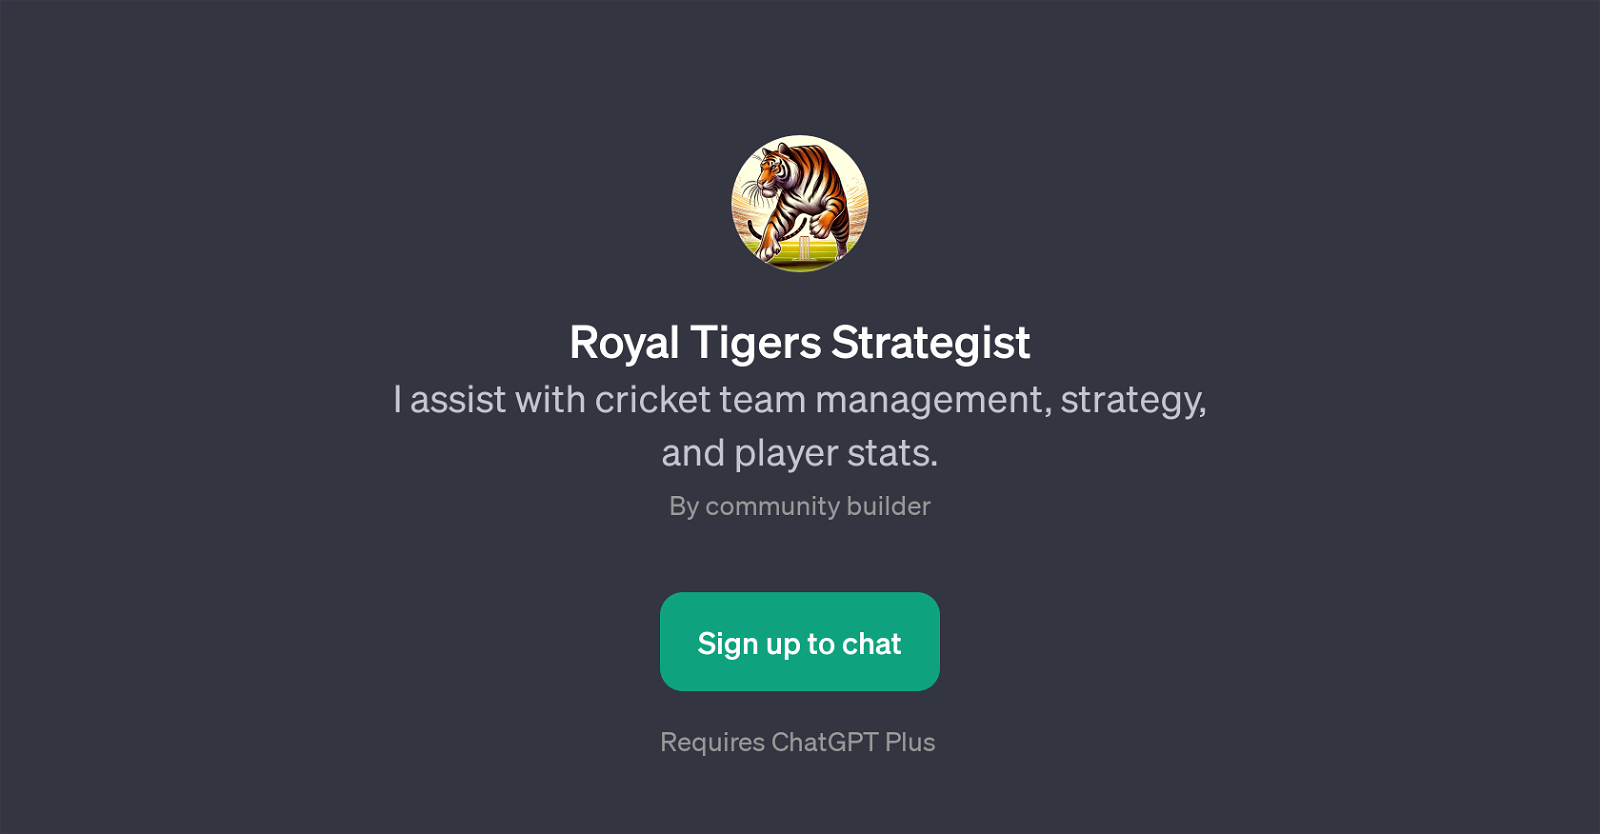 Royal Tigers Strategist website